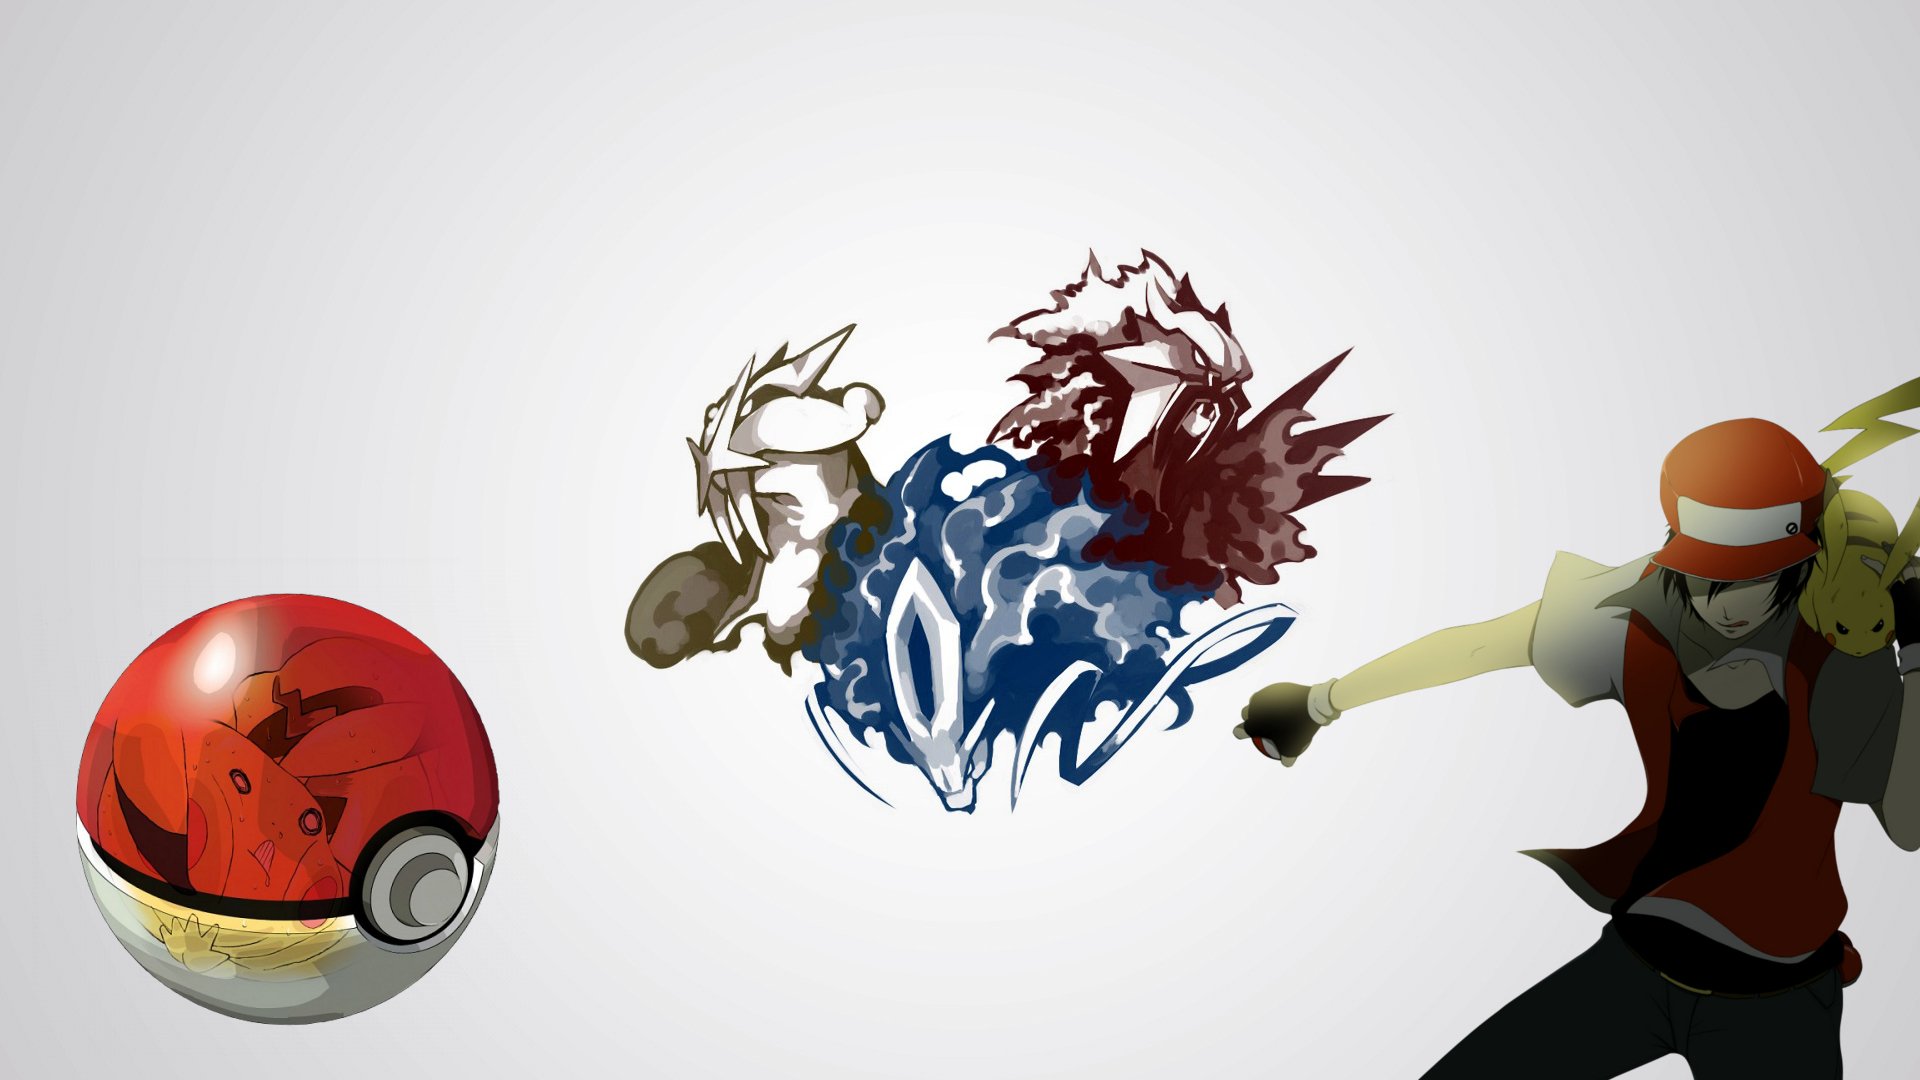 Pokémon Final Episode Poster Wallpaper for phone